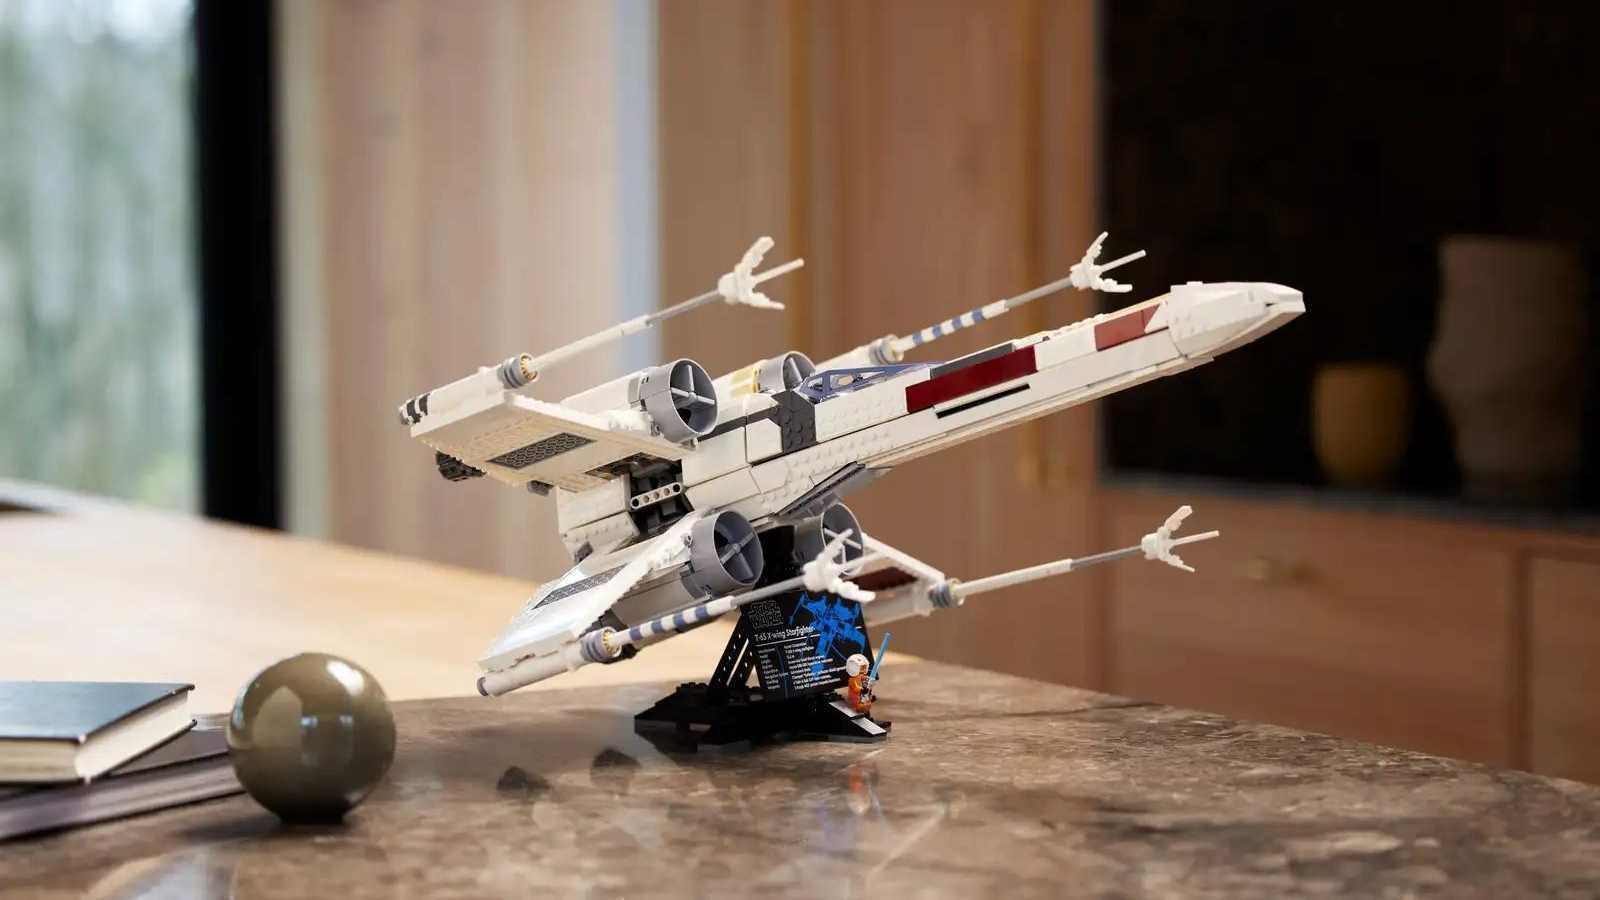 LEGO Star Wars X-Wing Starfighter on display